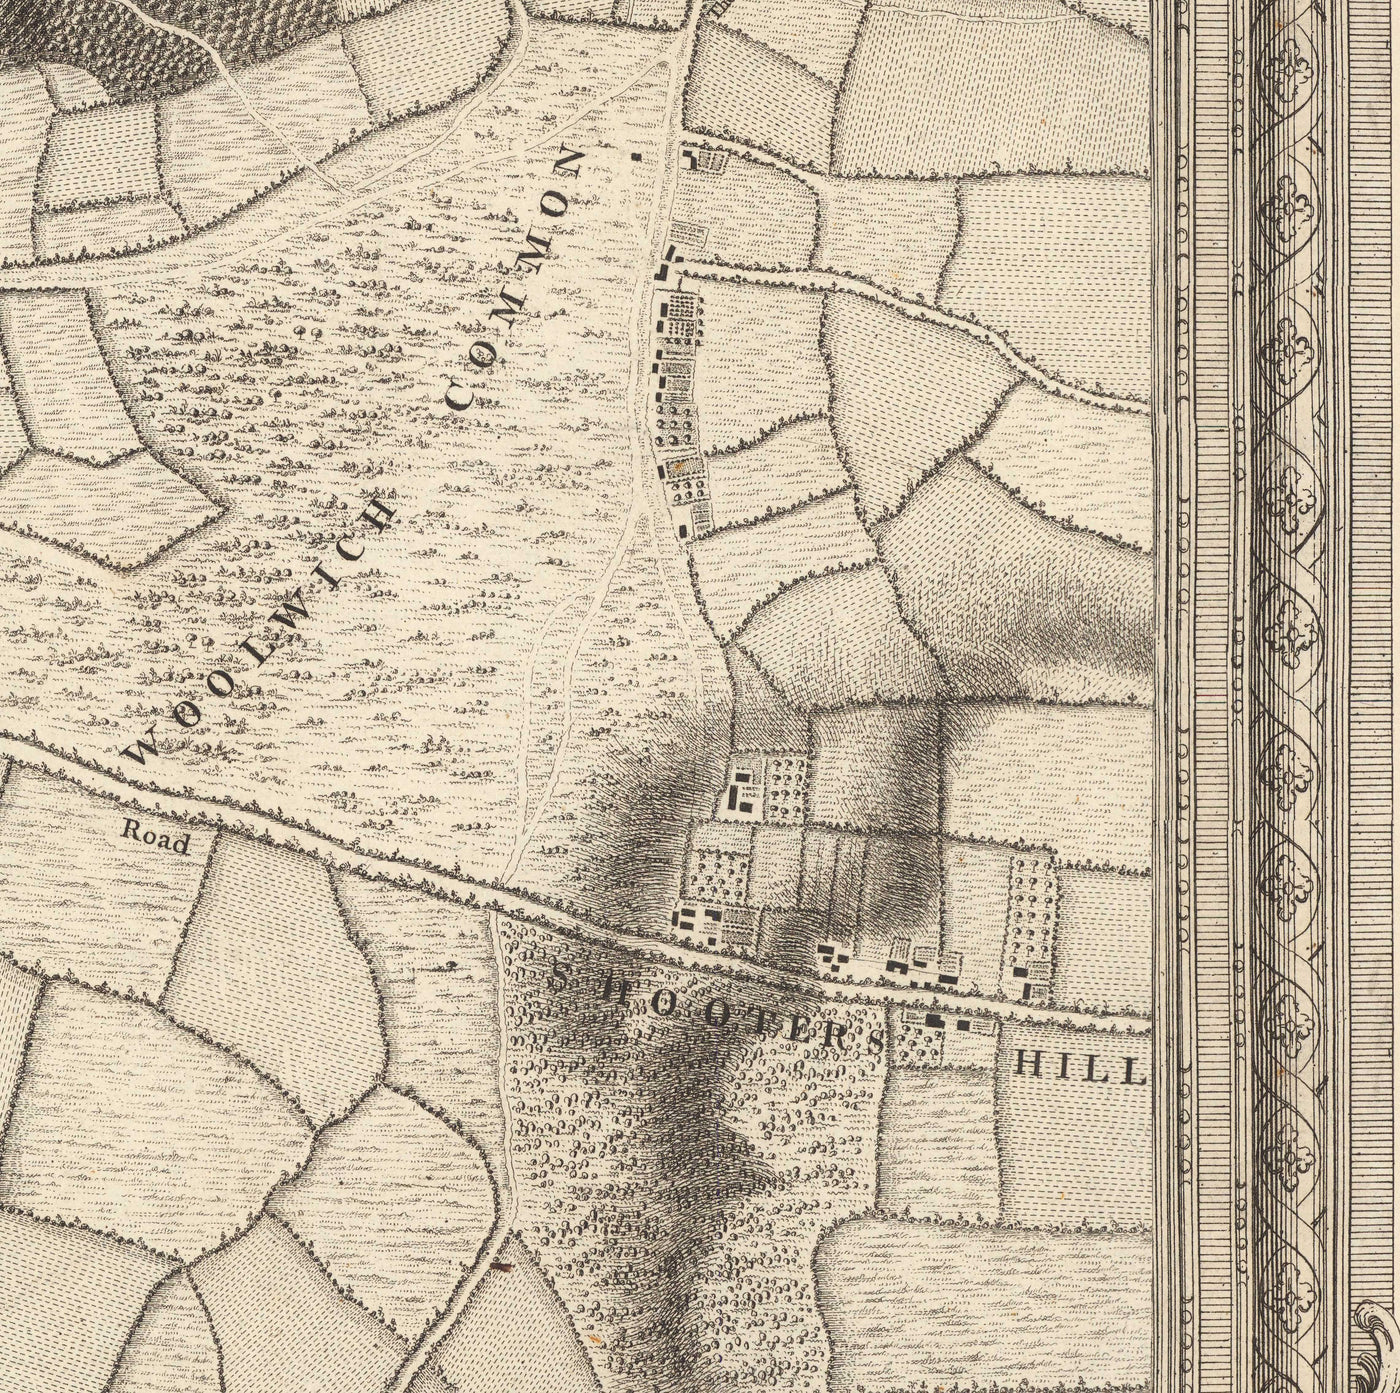 Ancienne carte du sud-est de Londres en 1746 par John Rocque - Lewisham, Woolwich, Greenwich, Eltham, Deptford, SE8, SE14, SE10, SE7, SE3, SE4, SE13